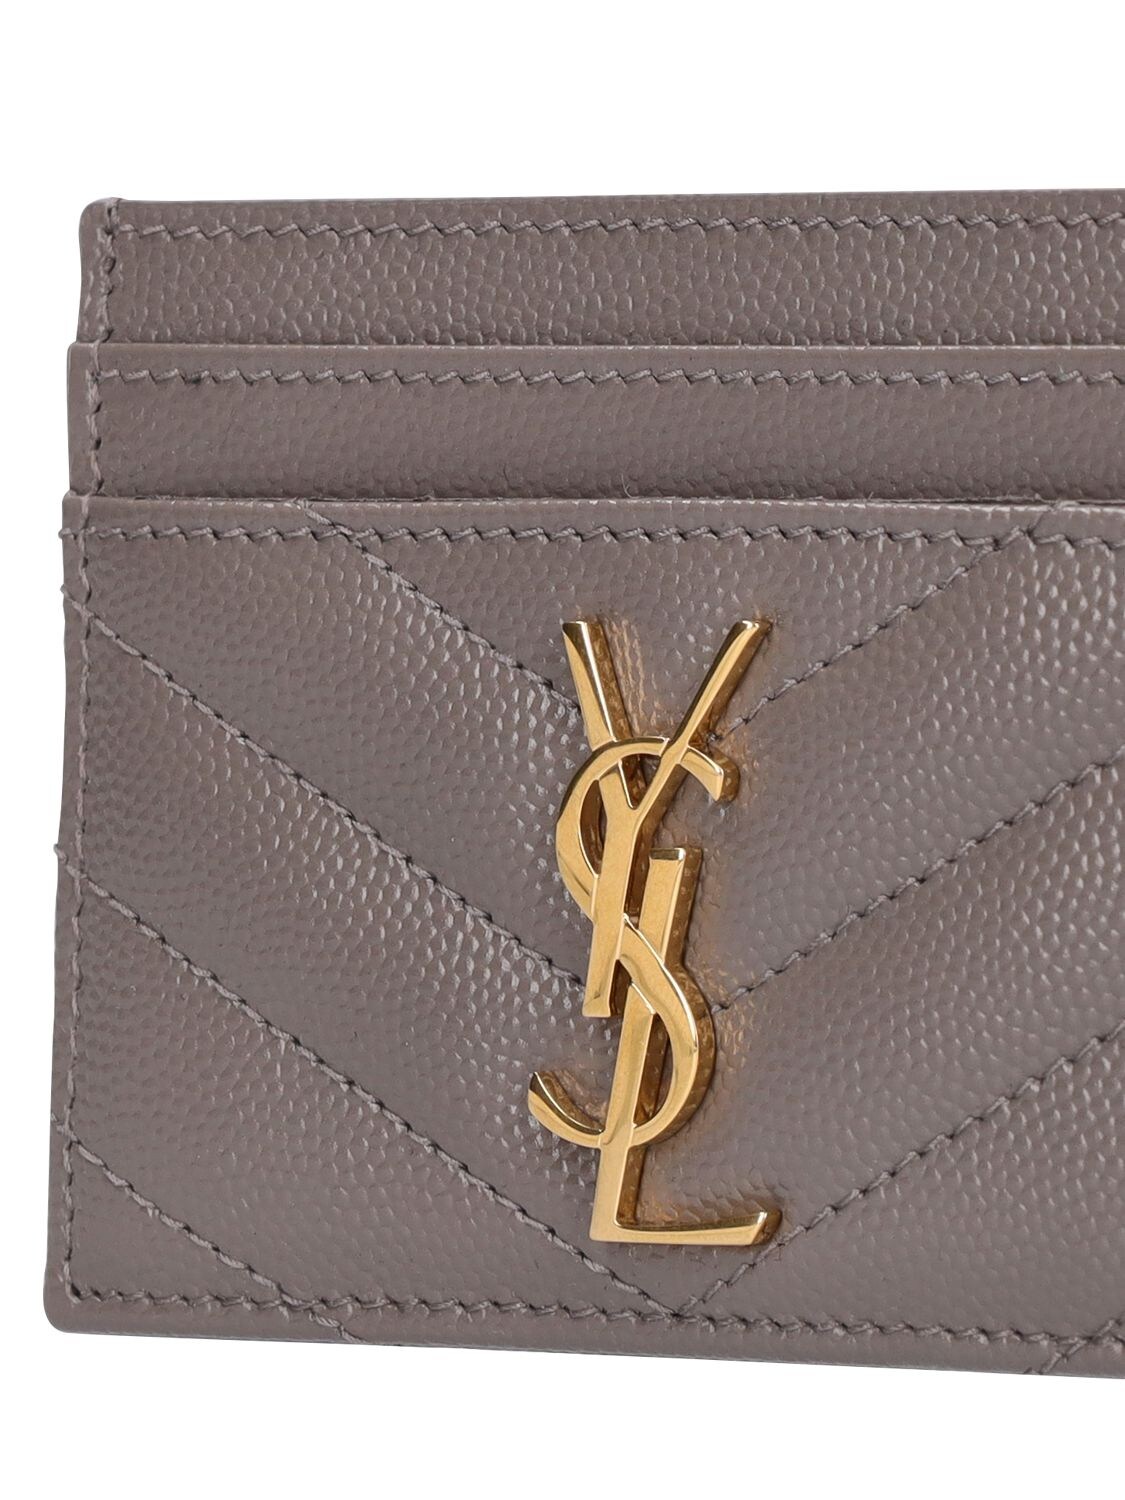 Saint Laurent Monogram Quilted Leather Card Holder